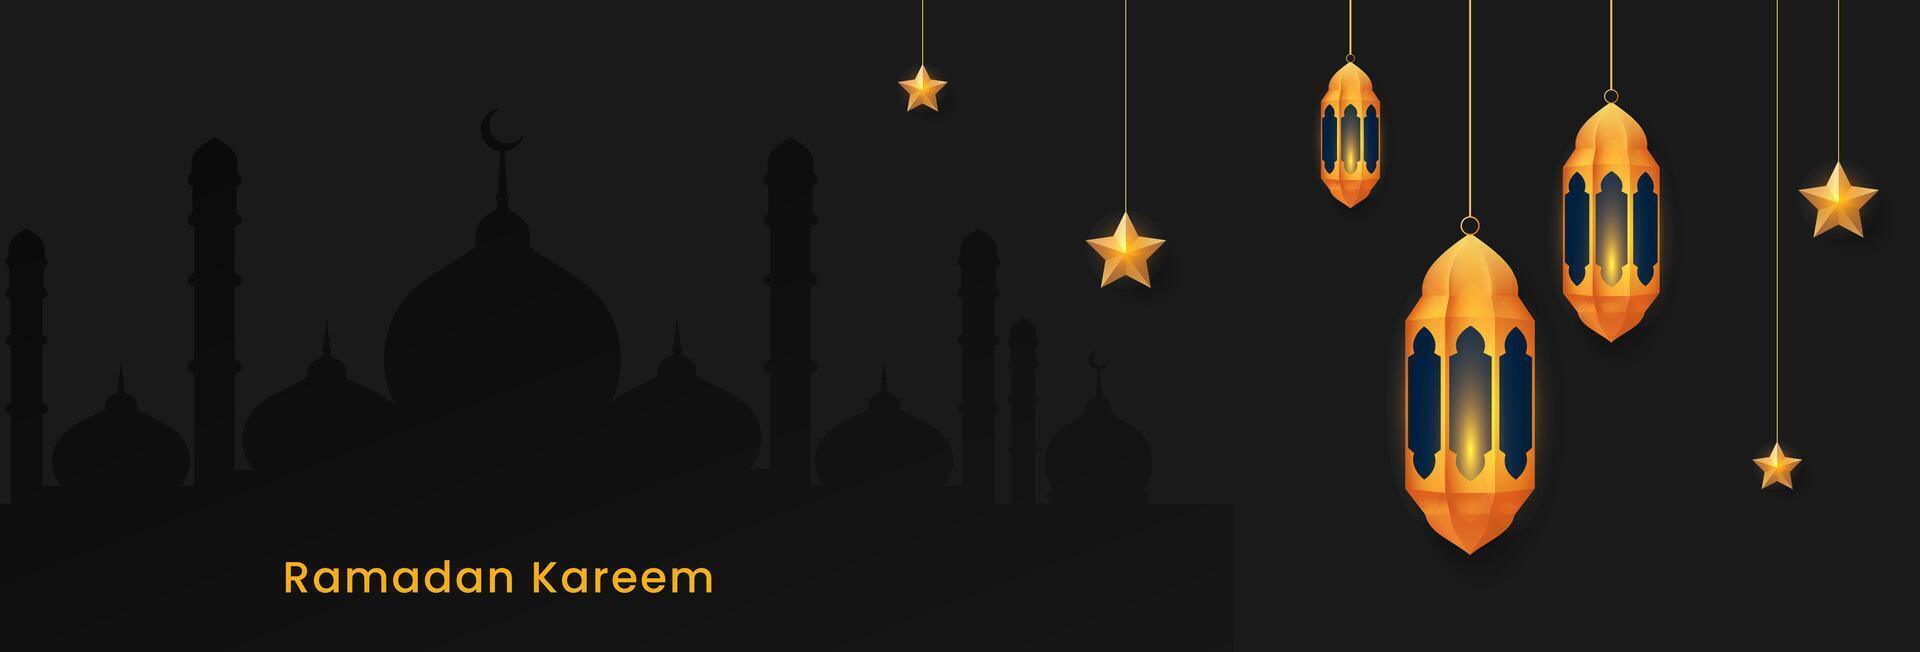 Ramadan kareem islamisch horizontal Banner. Illustration Vektor